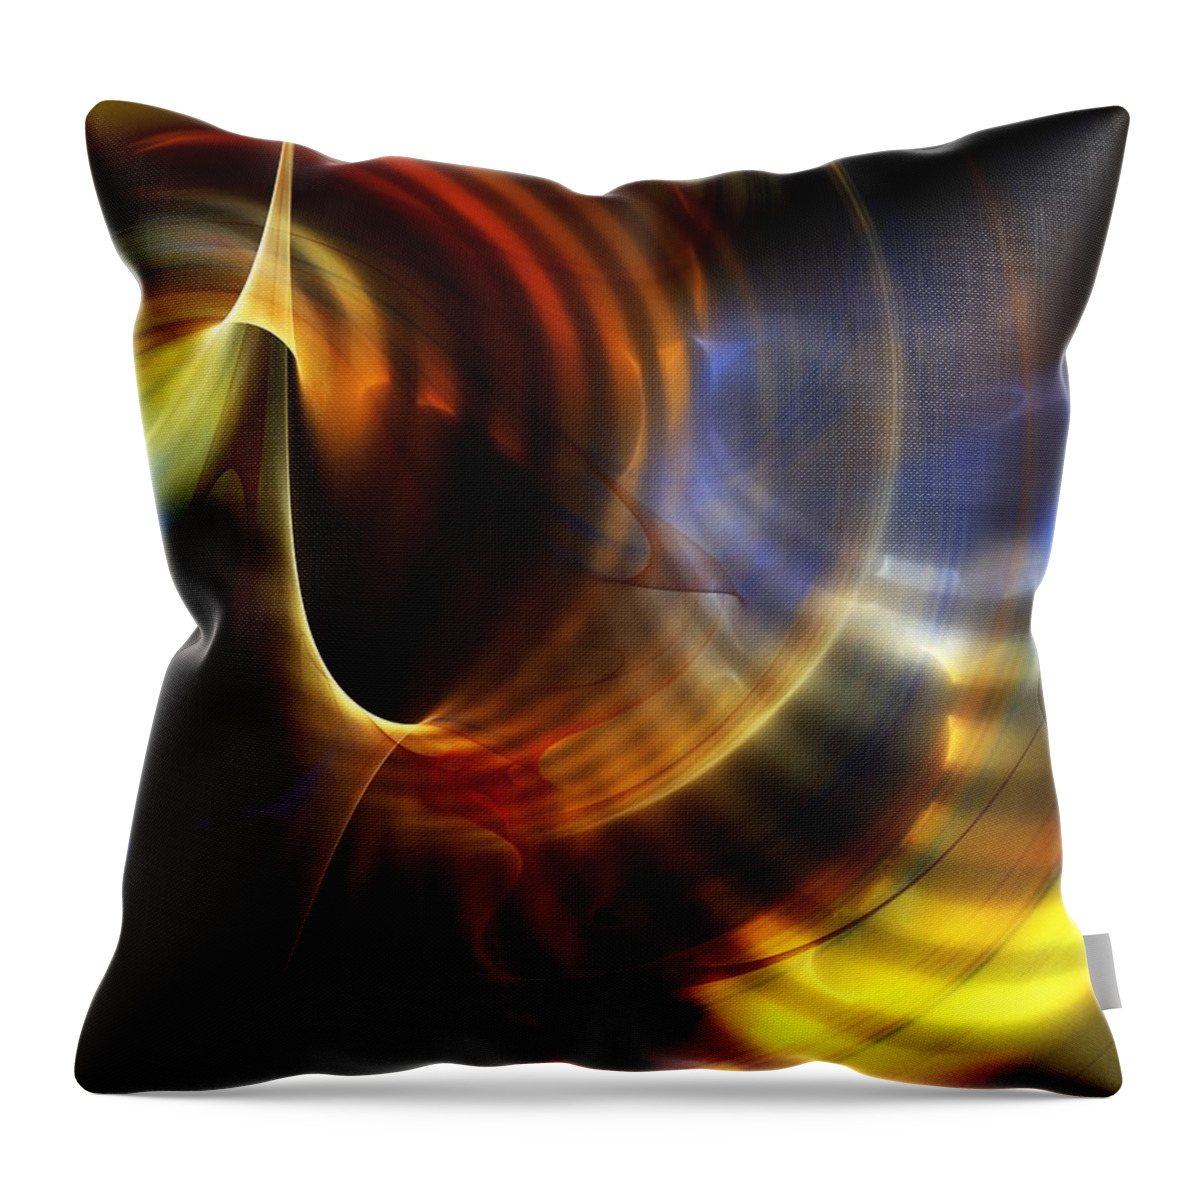 Fine Art Throw Pillow featuring the digital art Abstract 040511 by David Lane